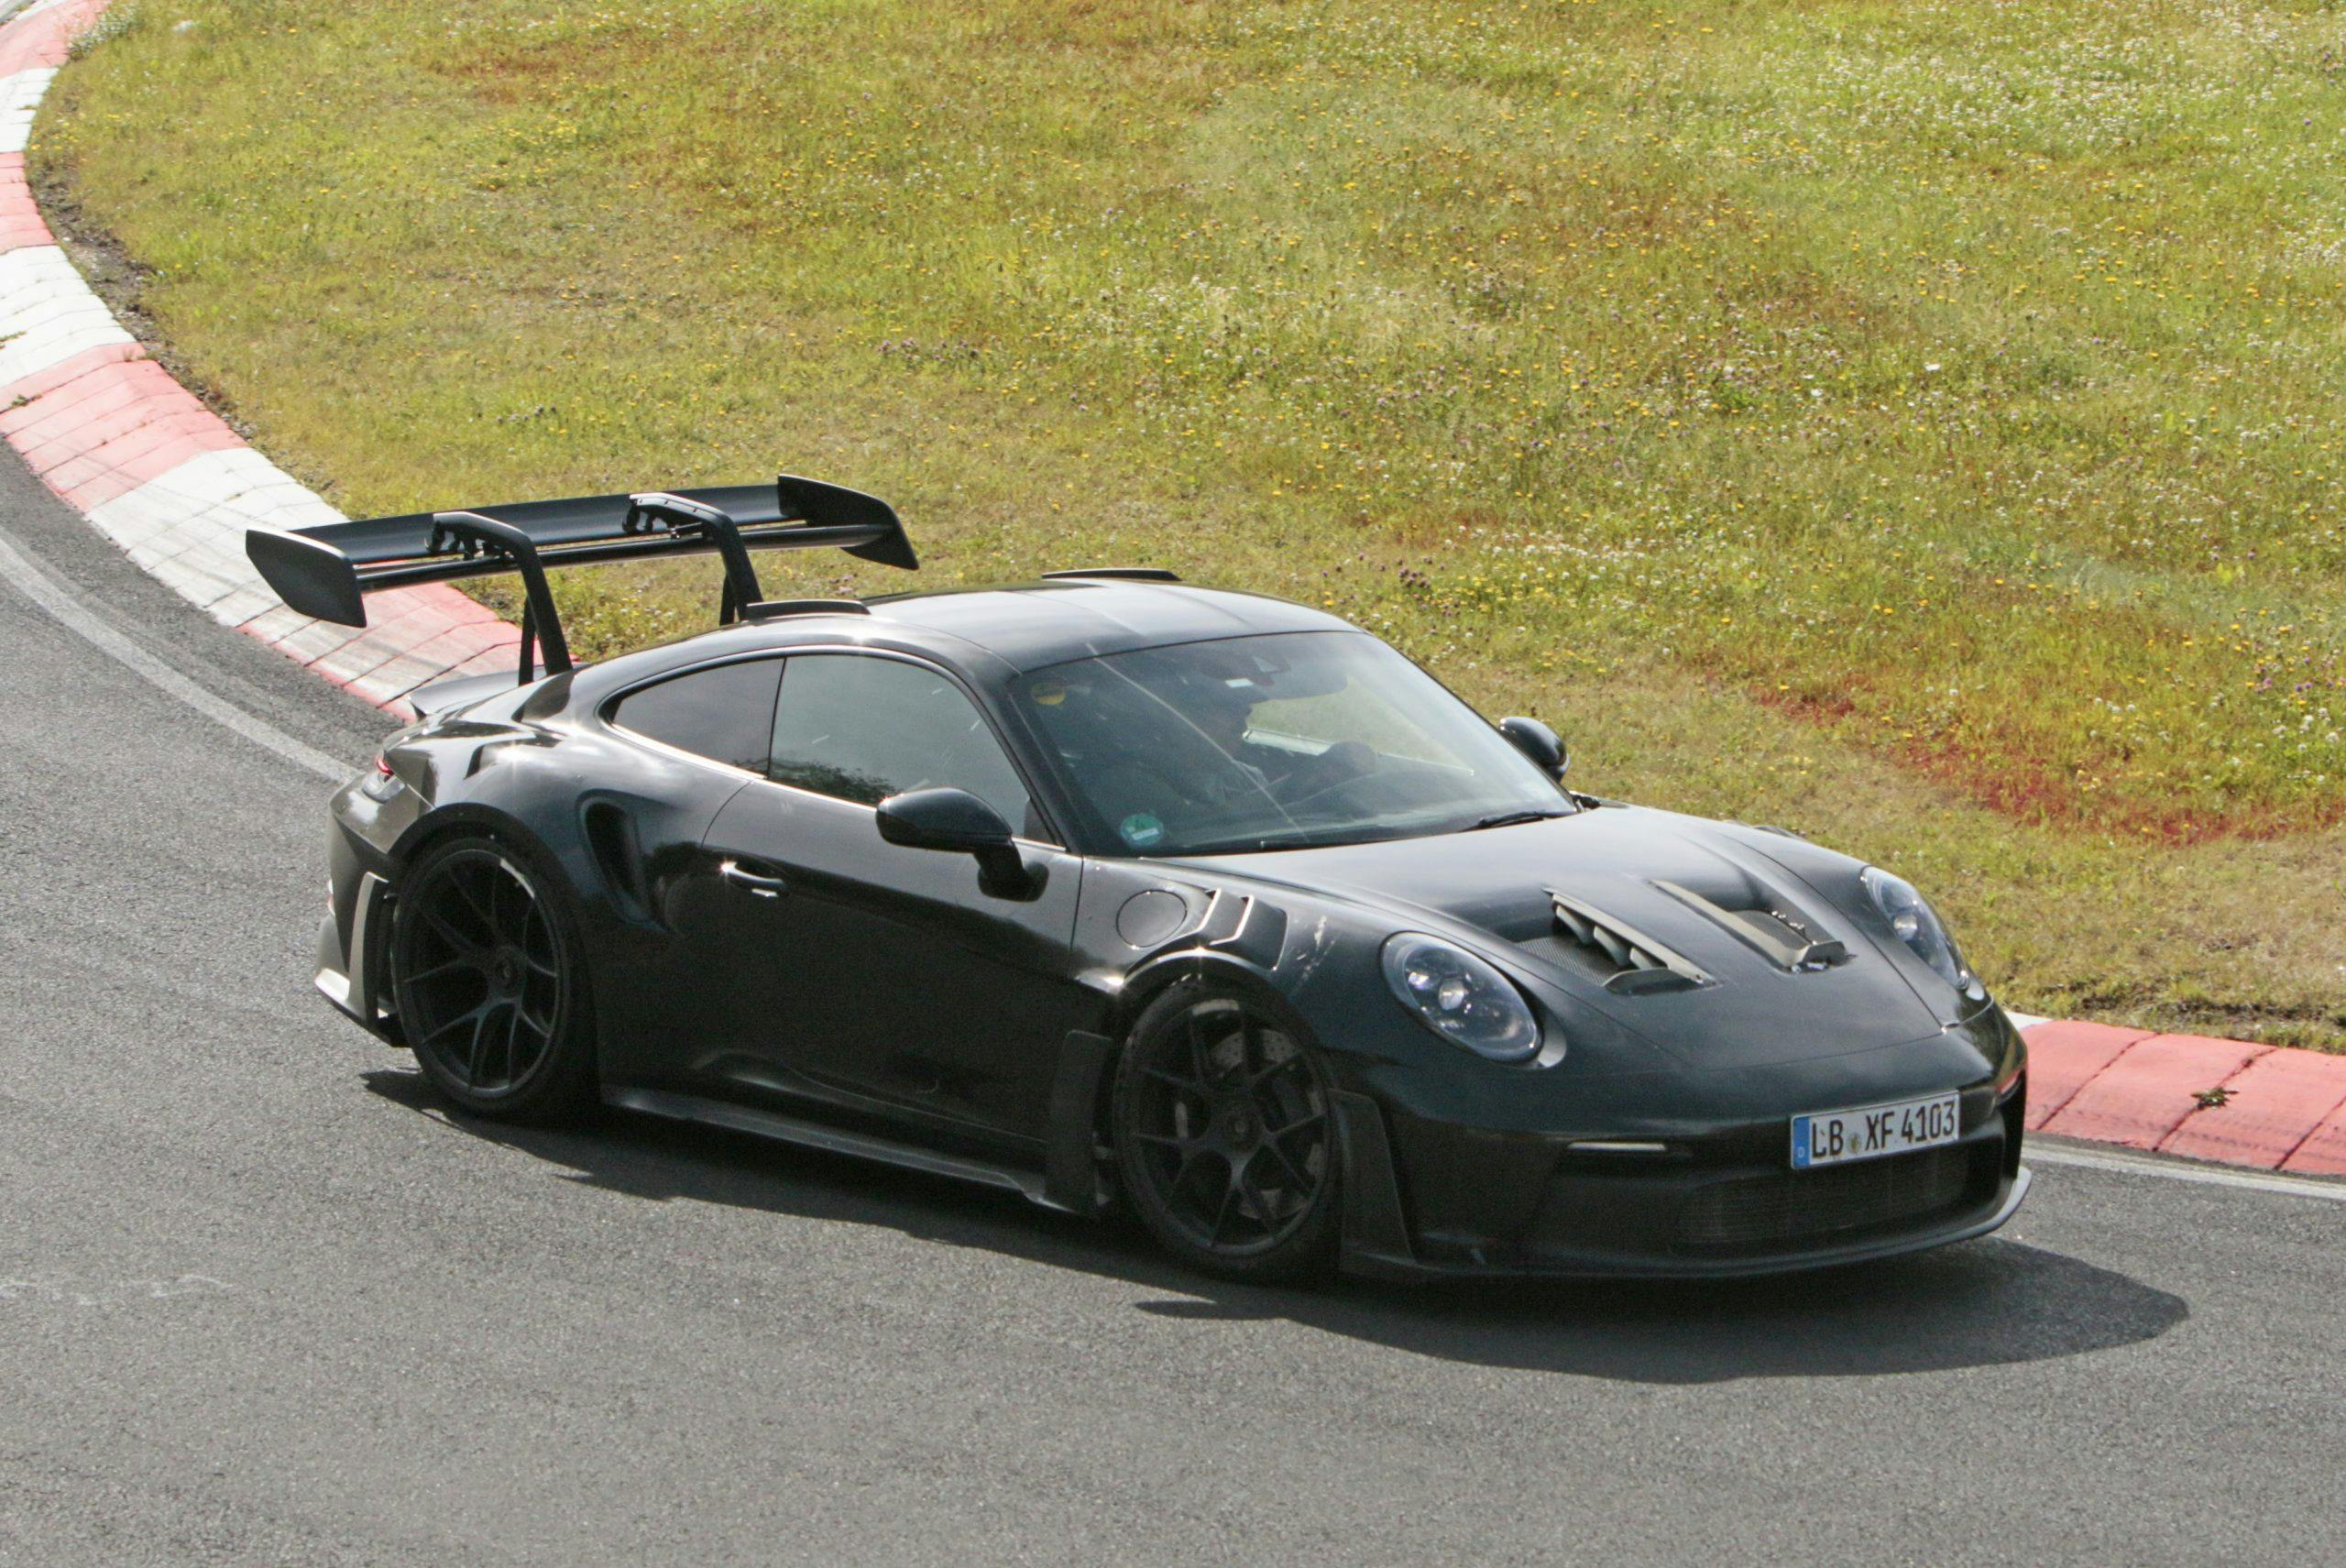 Porsche 911 GT3 RS Spy Shots exterior side profile high